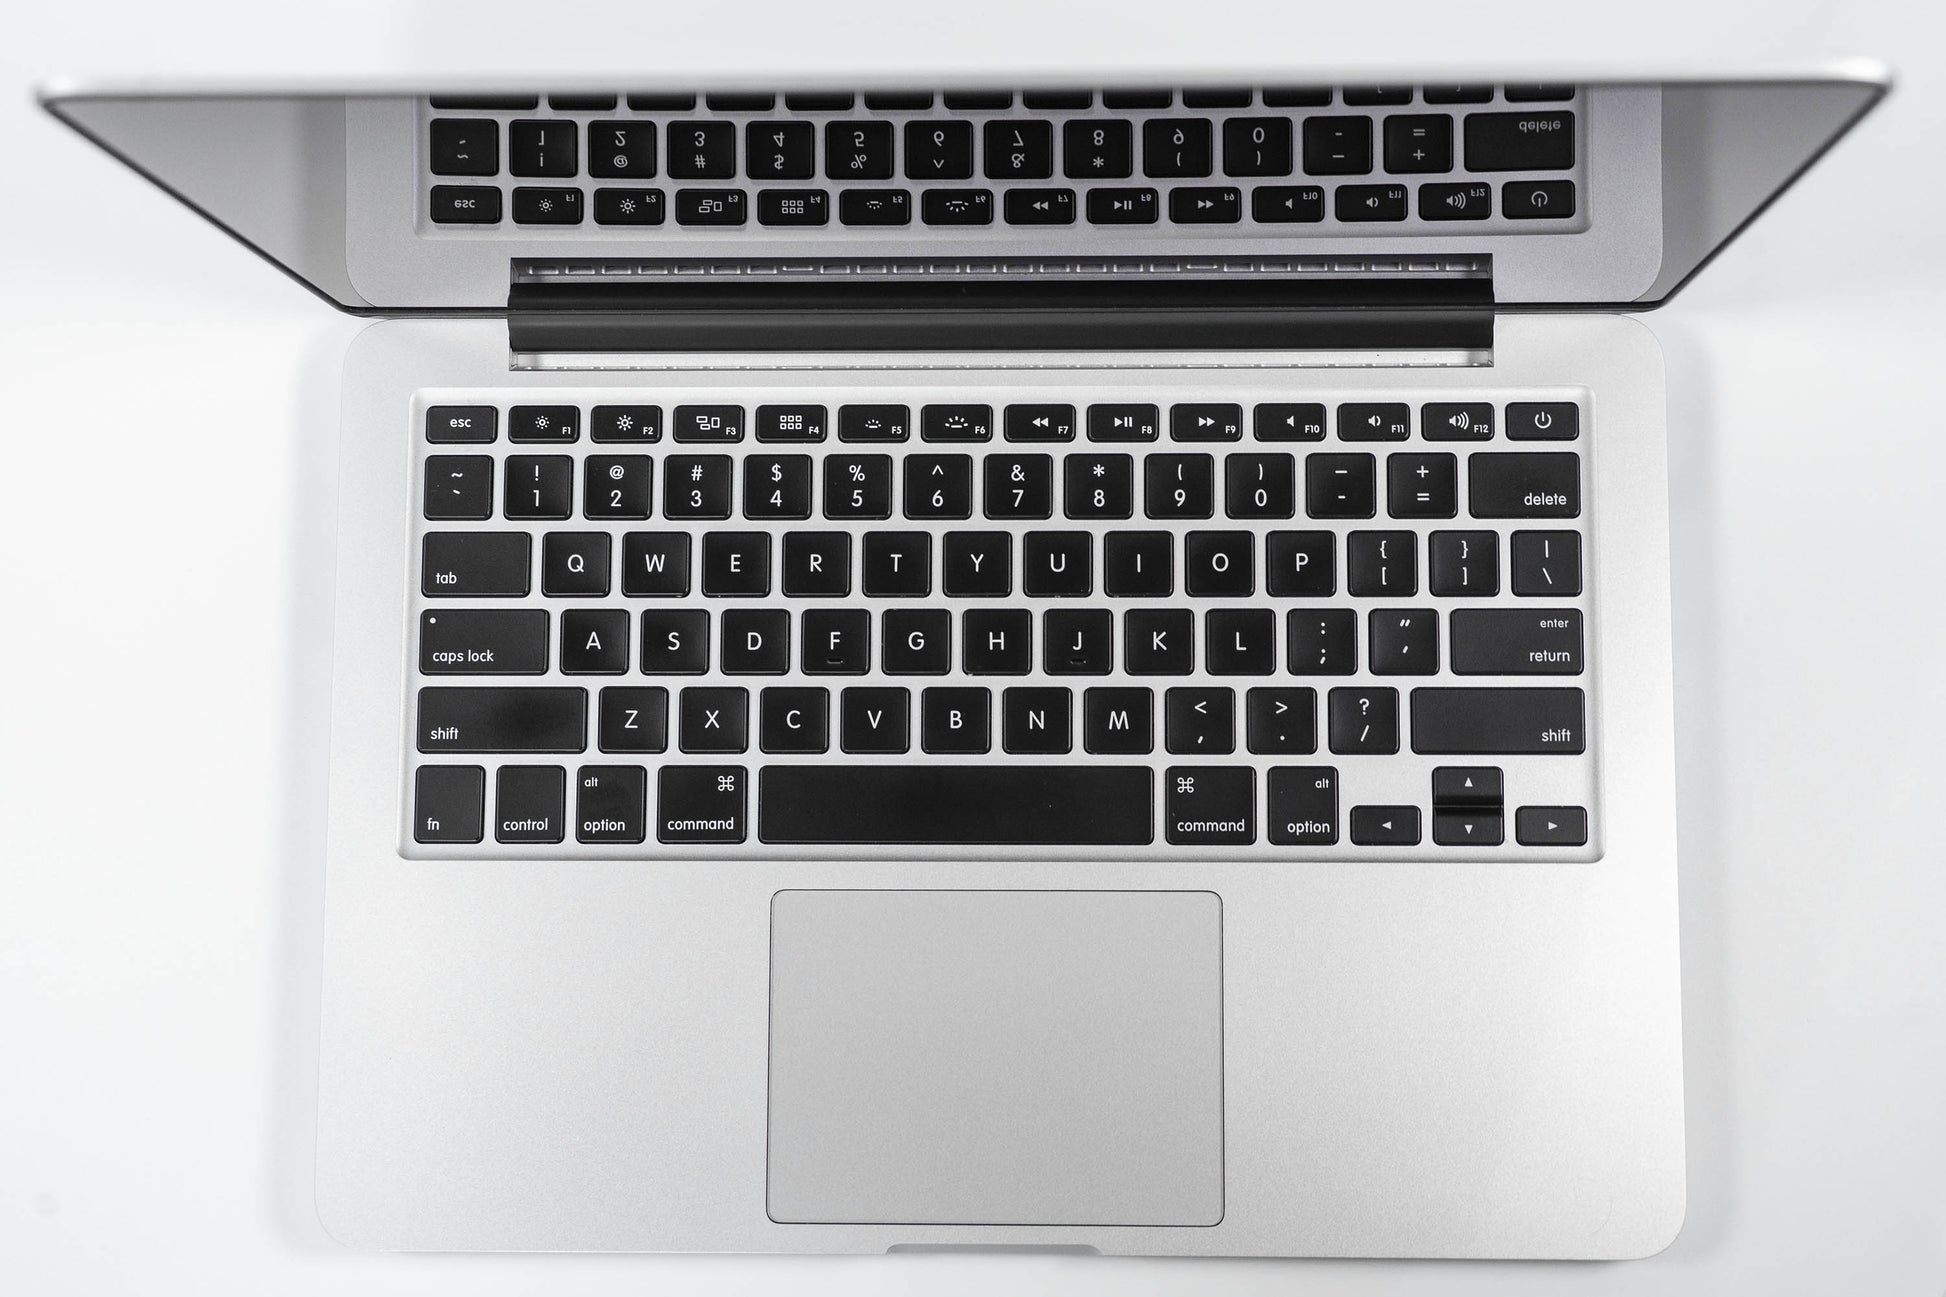 Apple MacBook Pro (13-inch Mid 2012) 2.5 GHz I5-3210M 8GB 256GB SSD (Silver)